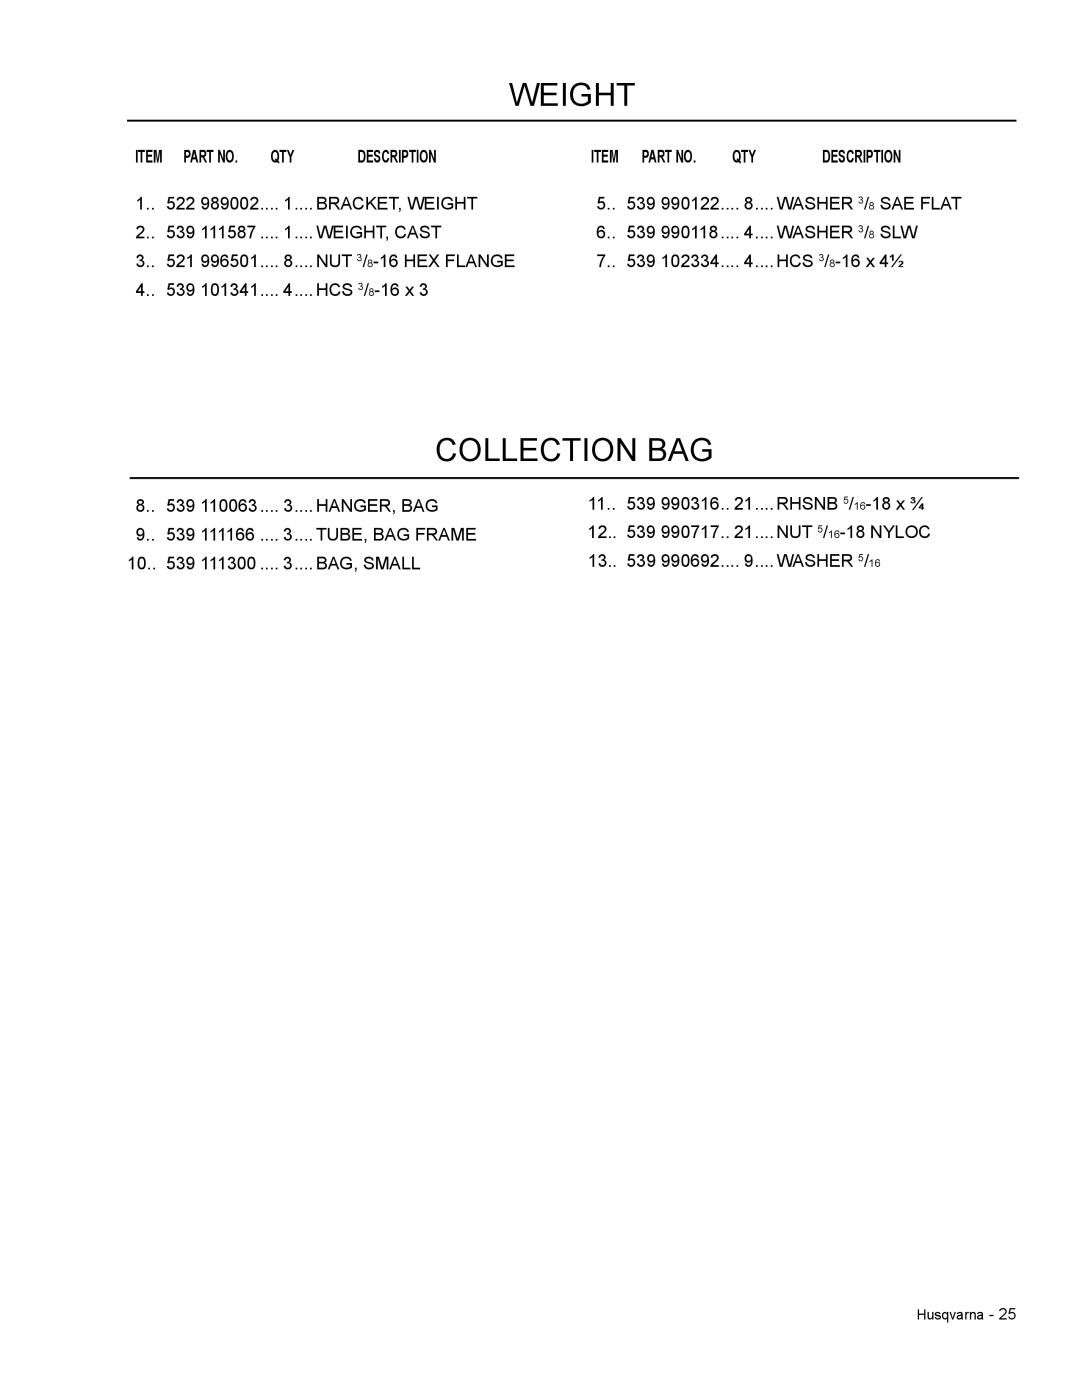 Dixon 966 004901 manual Weight, Collection Bag, Description, Item Part No 